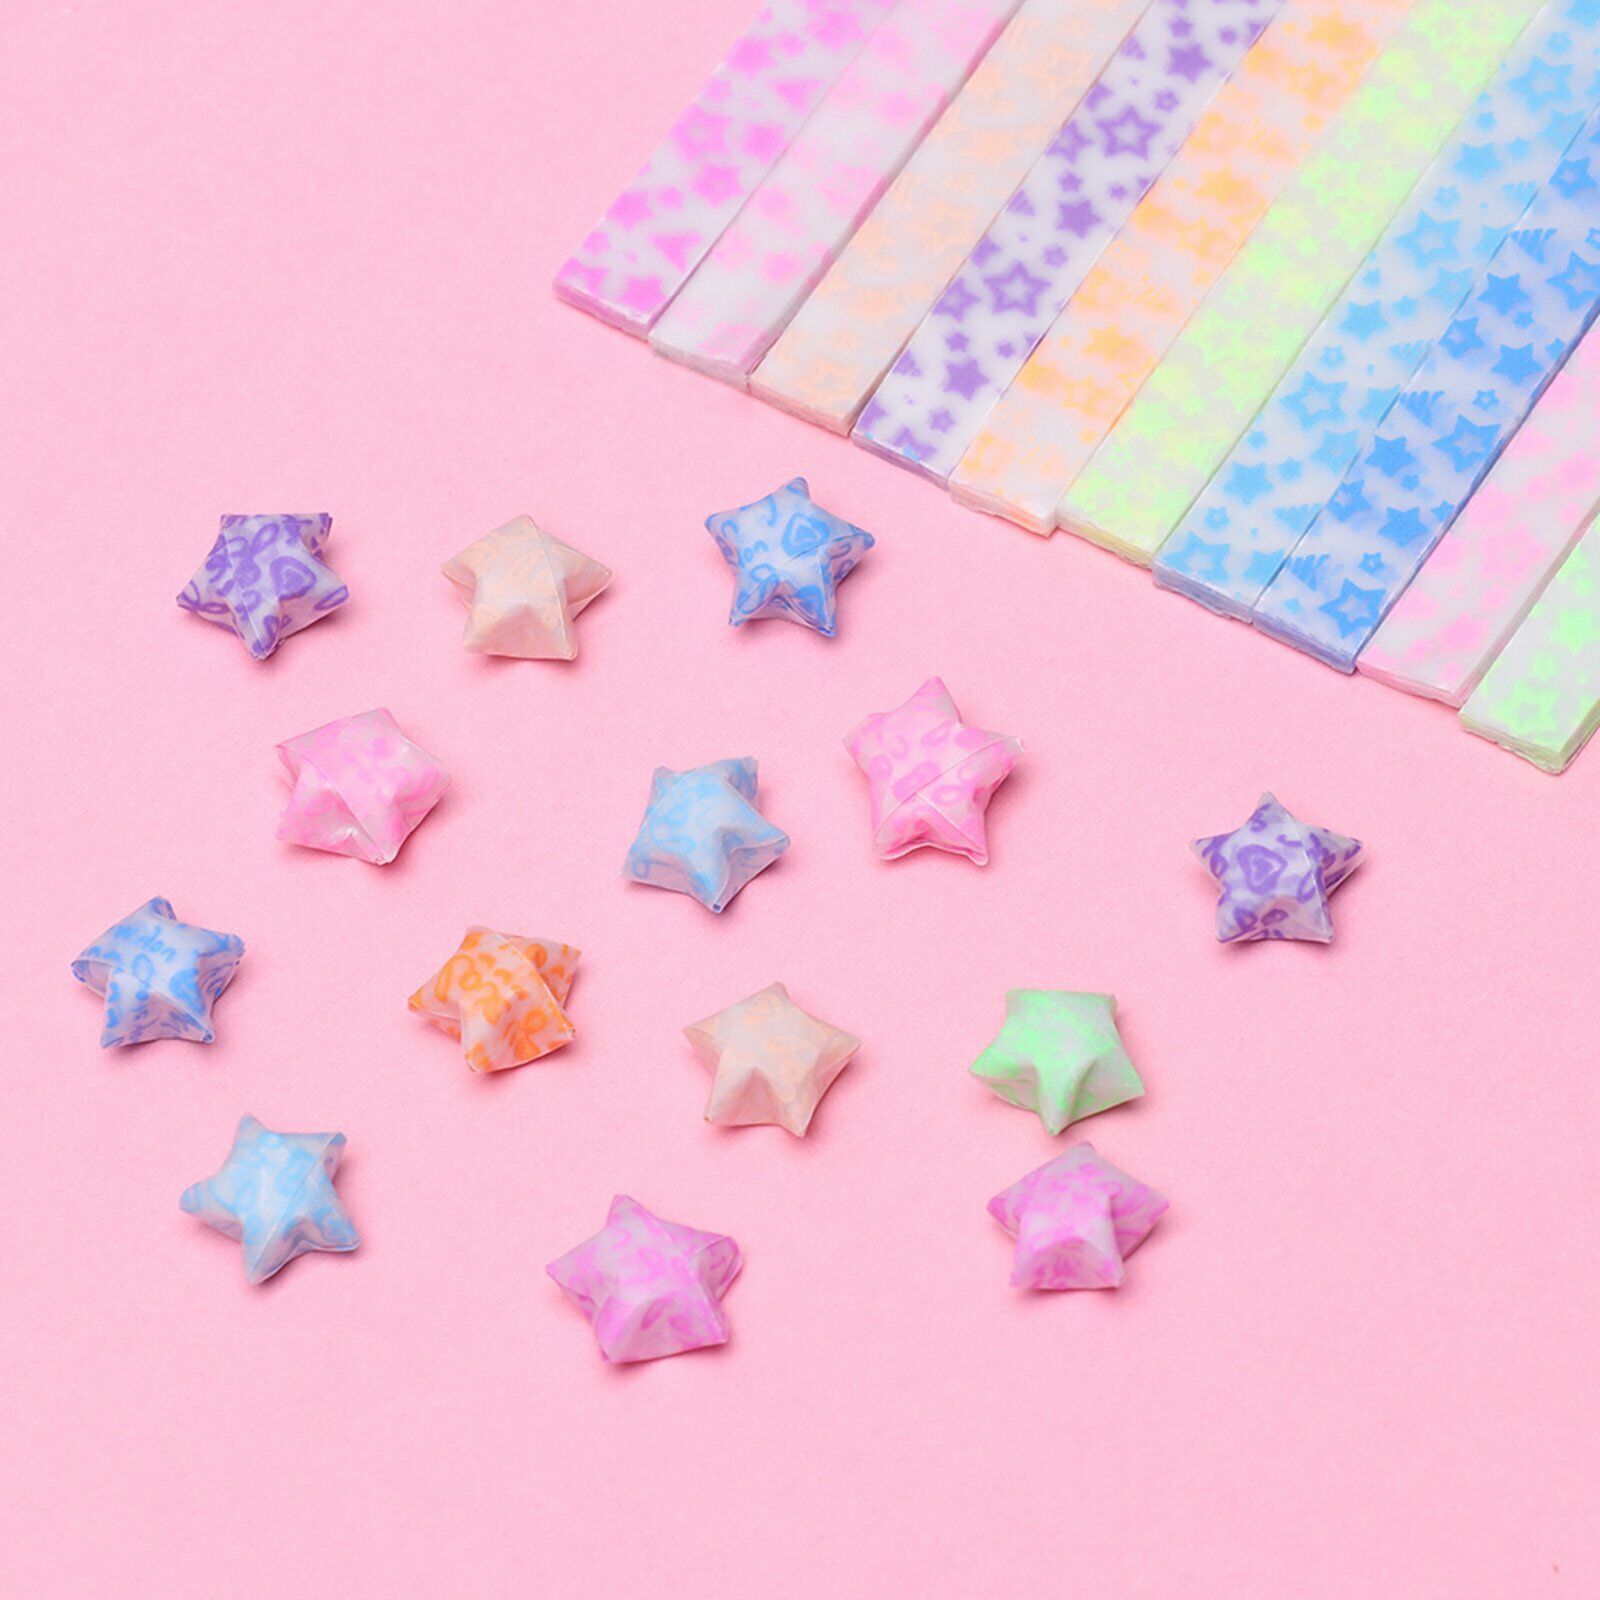 Origami Star Strips -  Australia